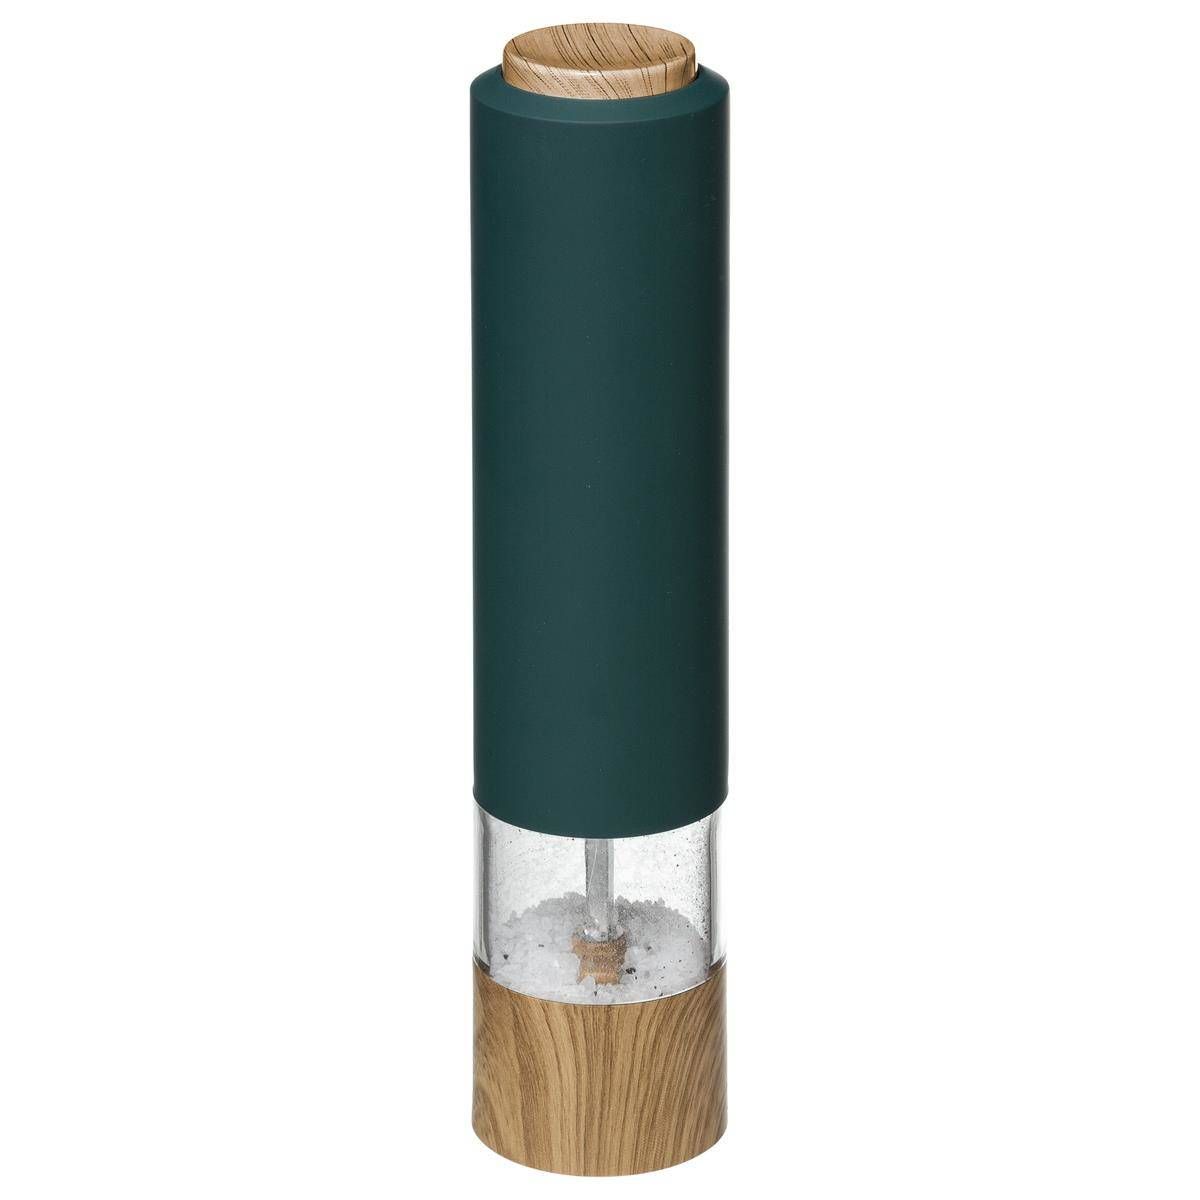 5five Simply Smart Elektrický mlýnek na sůl a pepř, mořská zelená barva - EDAXO.CZ s.r.o.